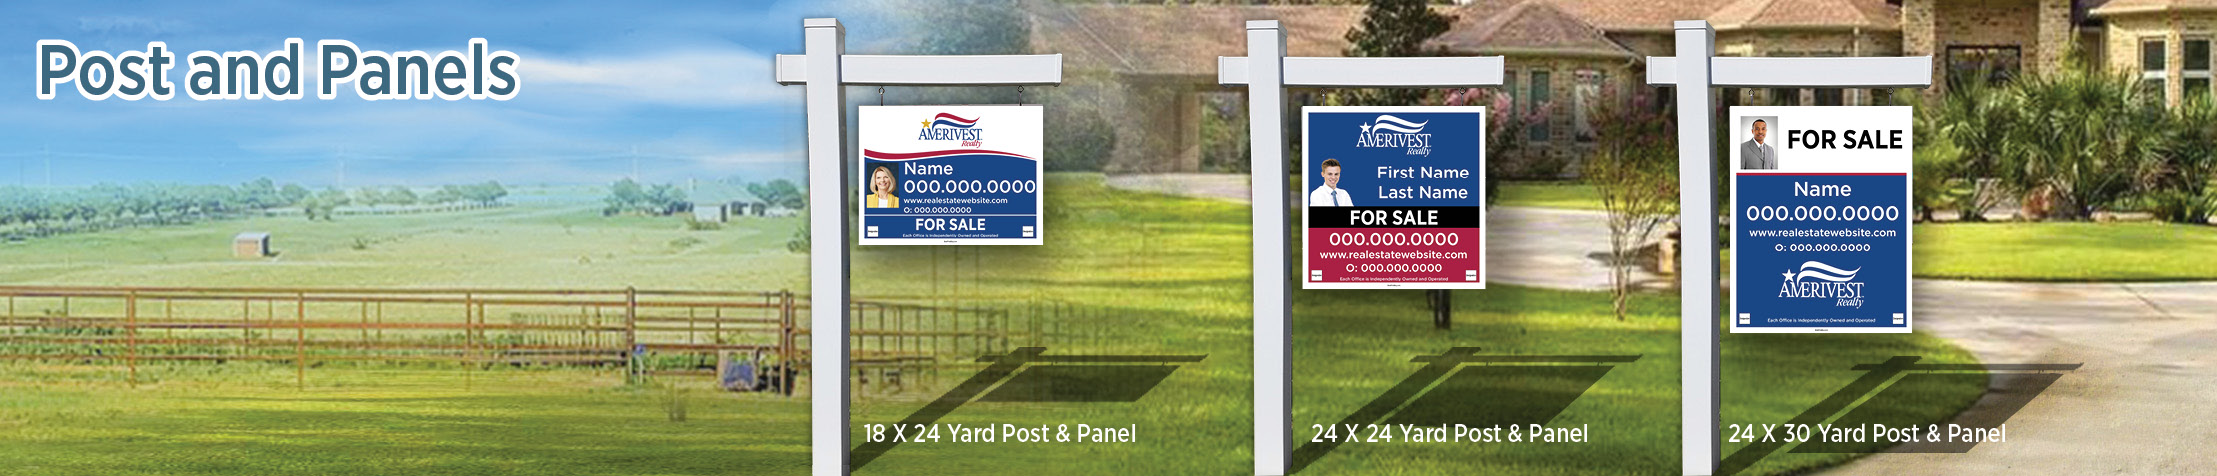 Amerivest Realty Real Estate Post and Panel - AVR approved vendor real estate signs | BestPrintBuy.com